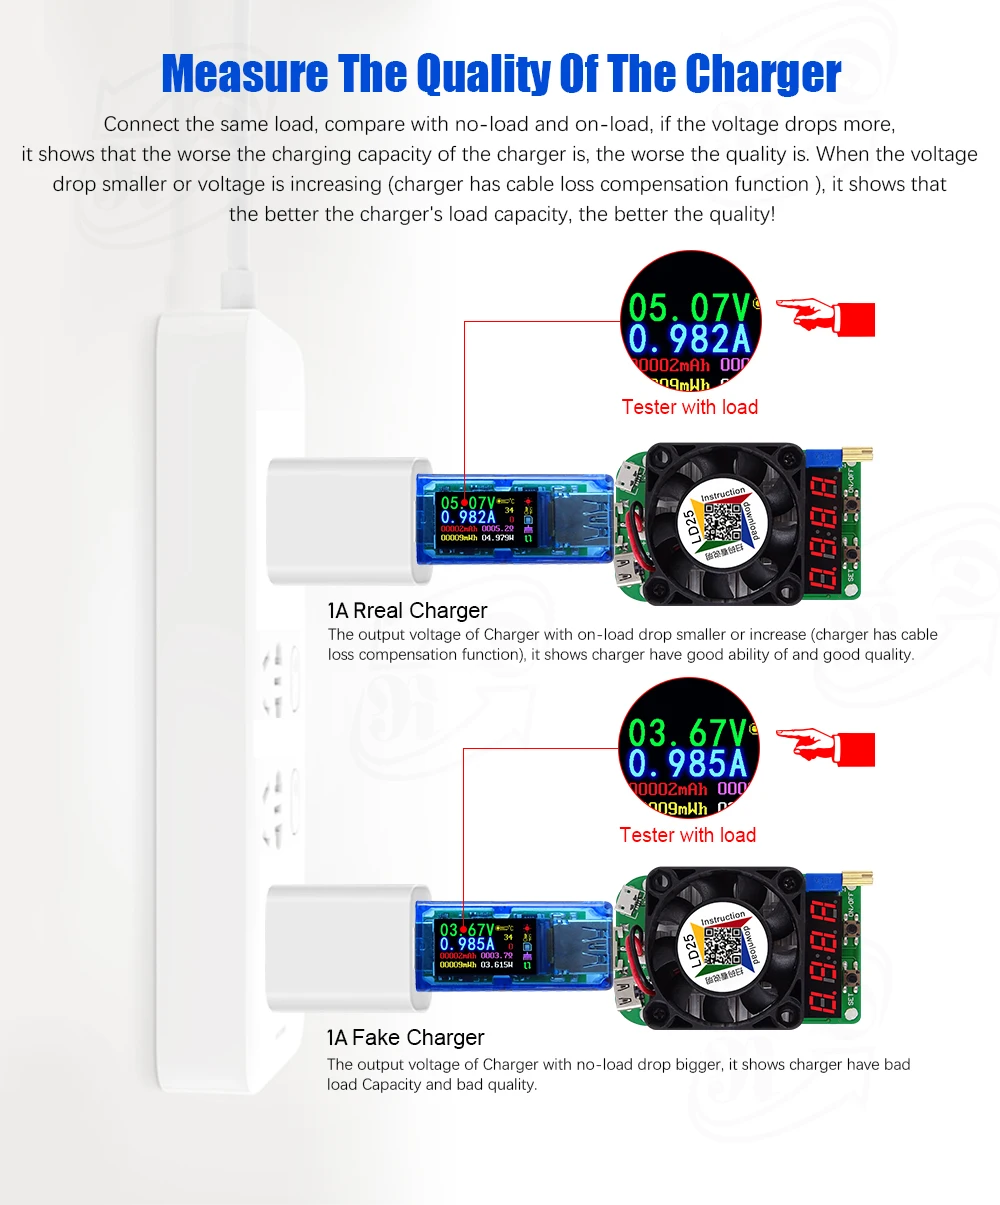 AT34 AT35 USB 3.0 color LCD Voltmeter ammeter voltage current meter multimeter battery charge power bank USB Tester